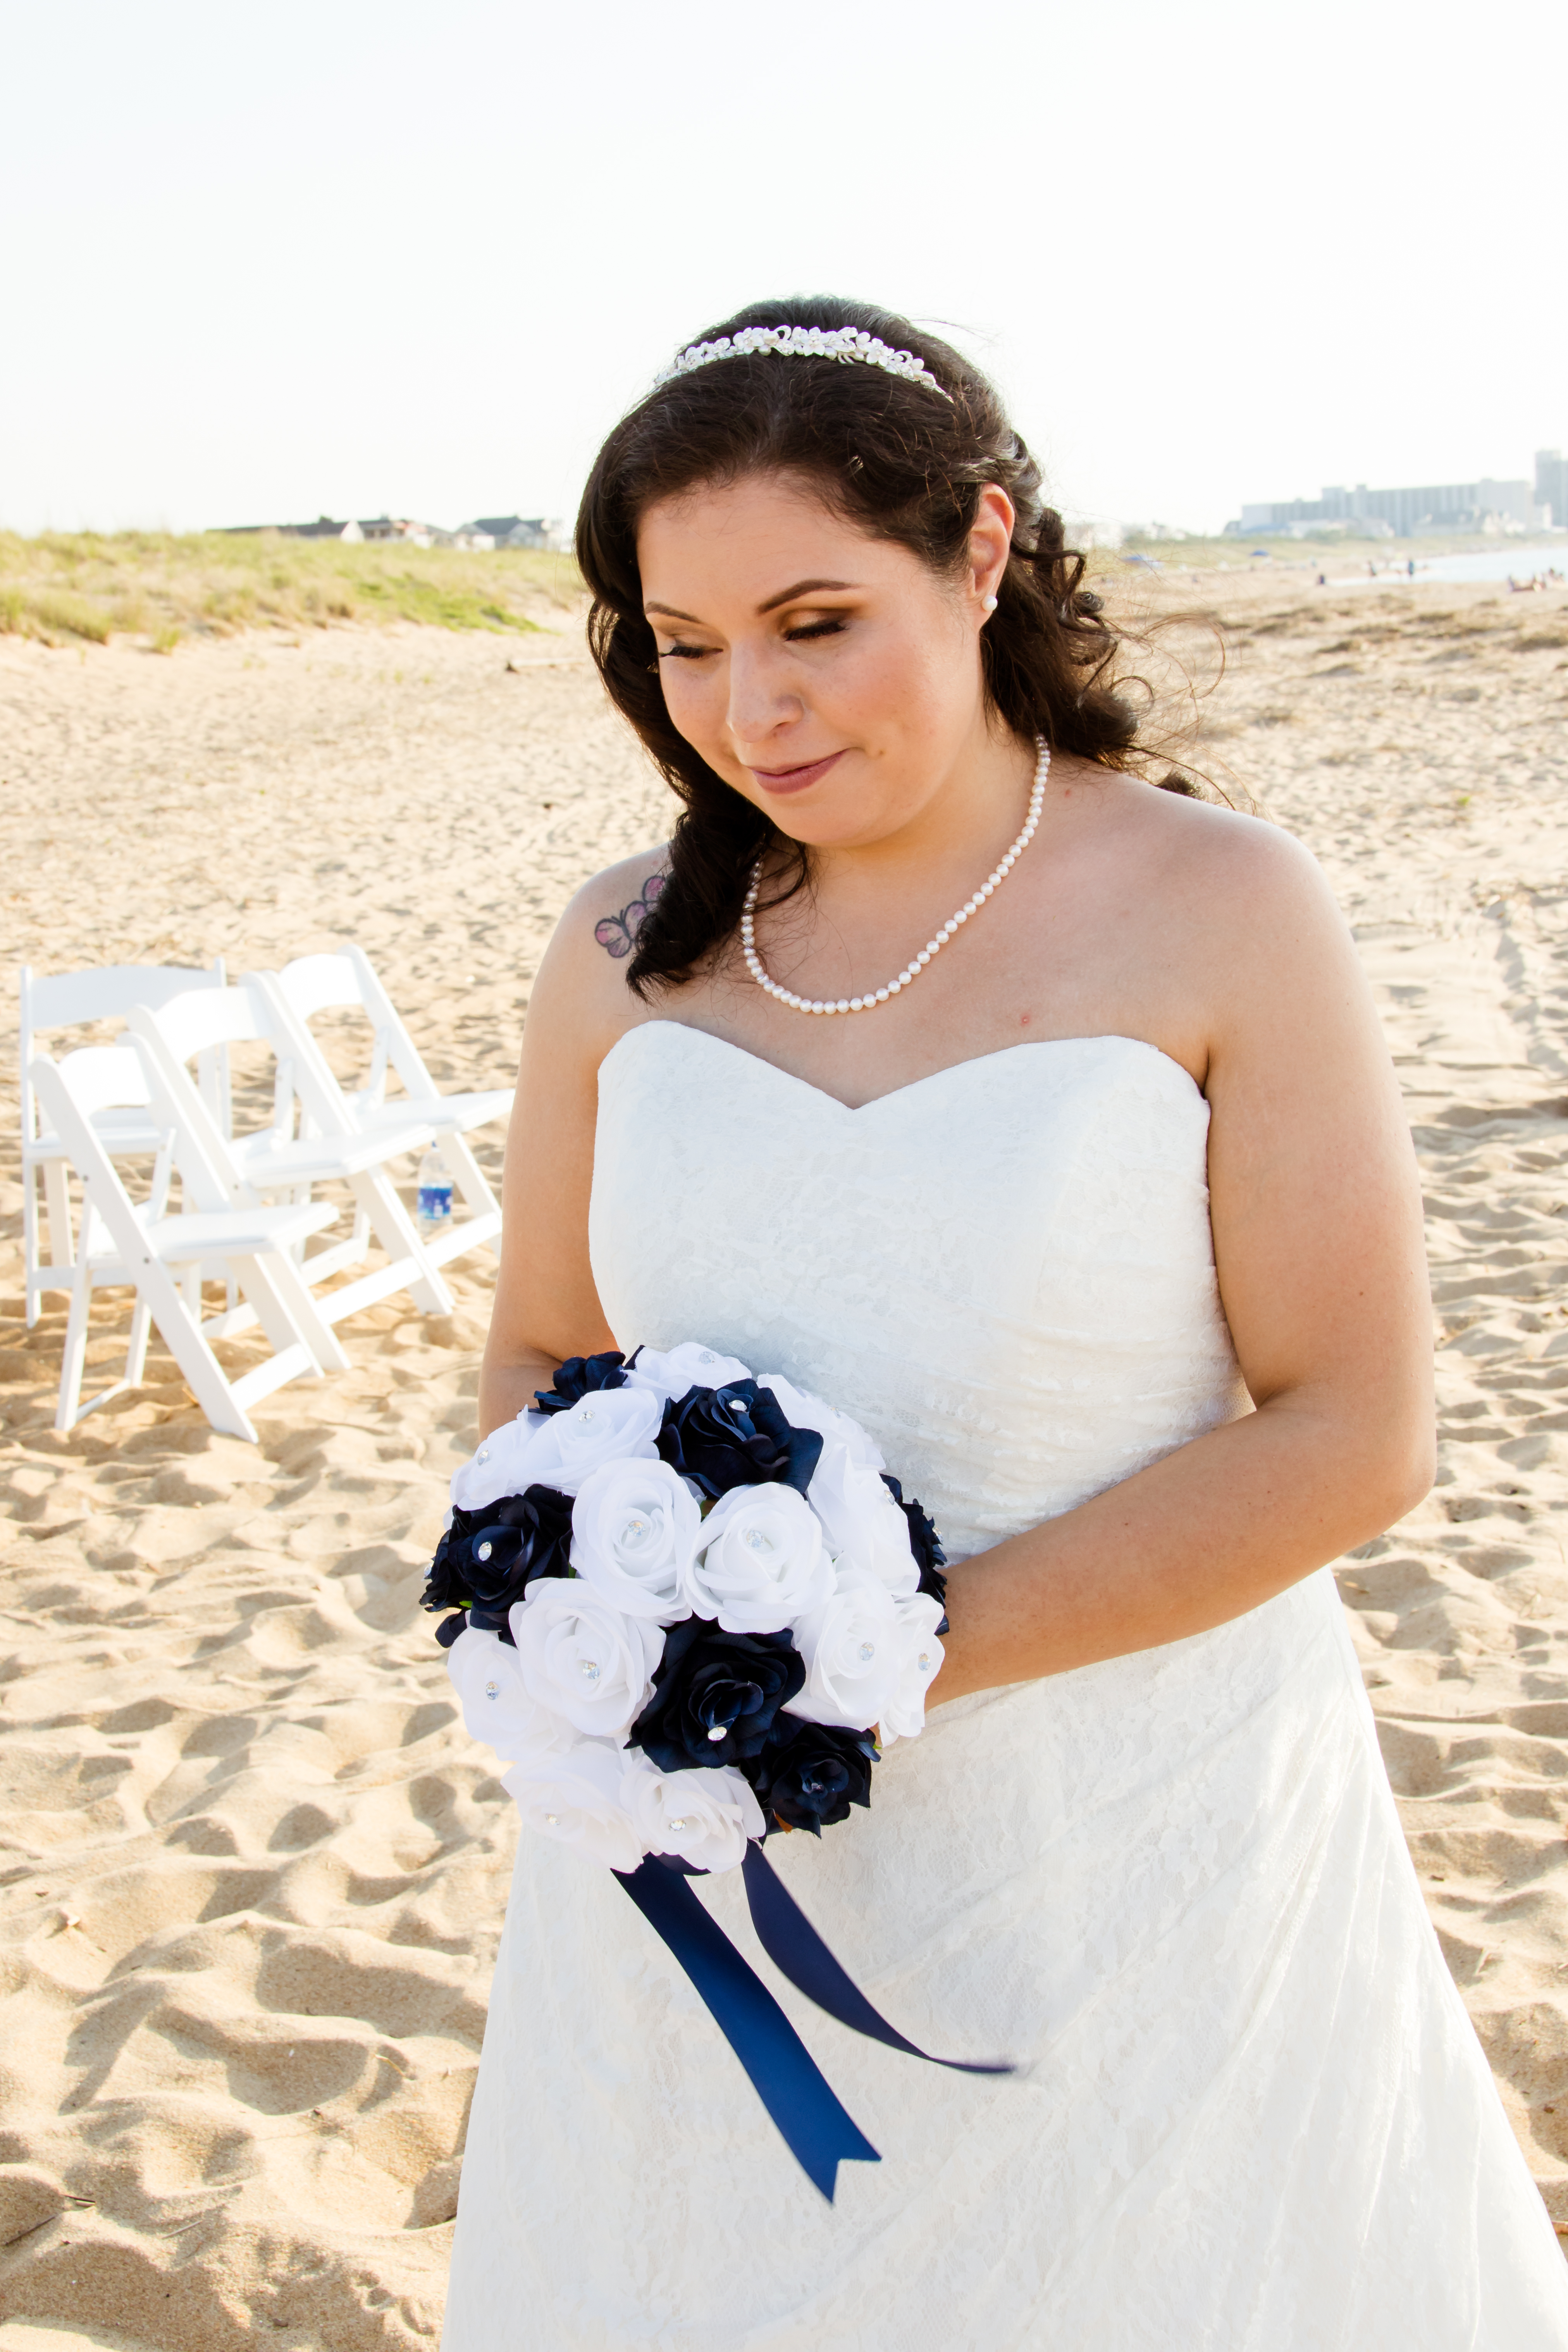 Danielle McCann in her wedding dress holding flowers